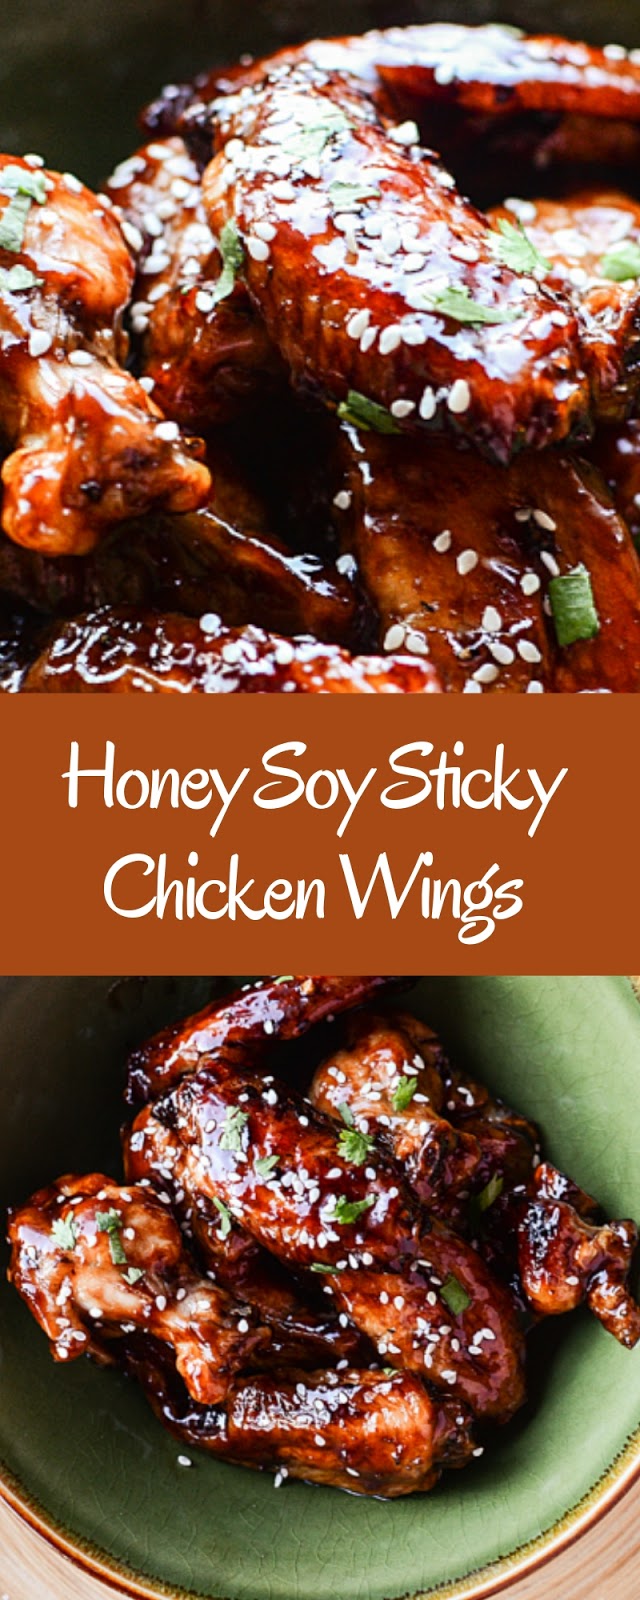 Honey Soy Sticky Chicken Wings